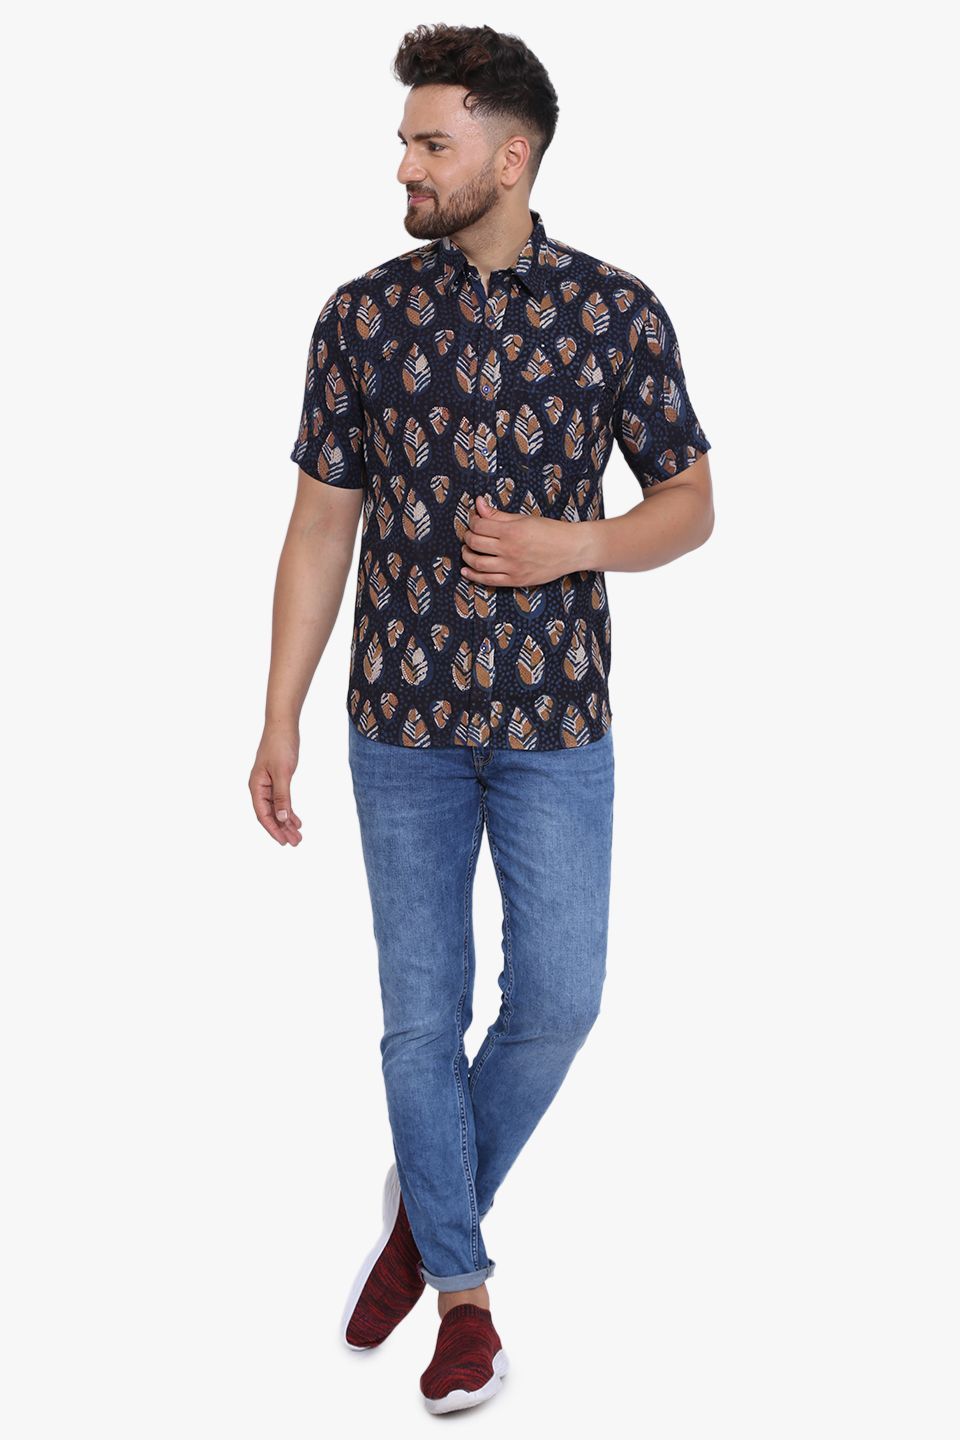 Jaipur 100% Cotton Black Floral Shirt